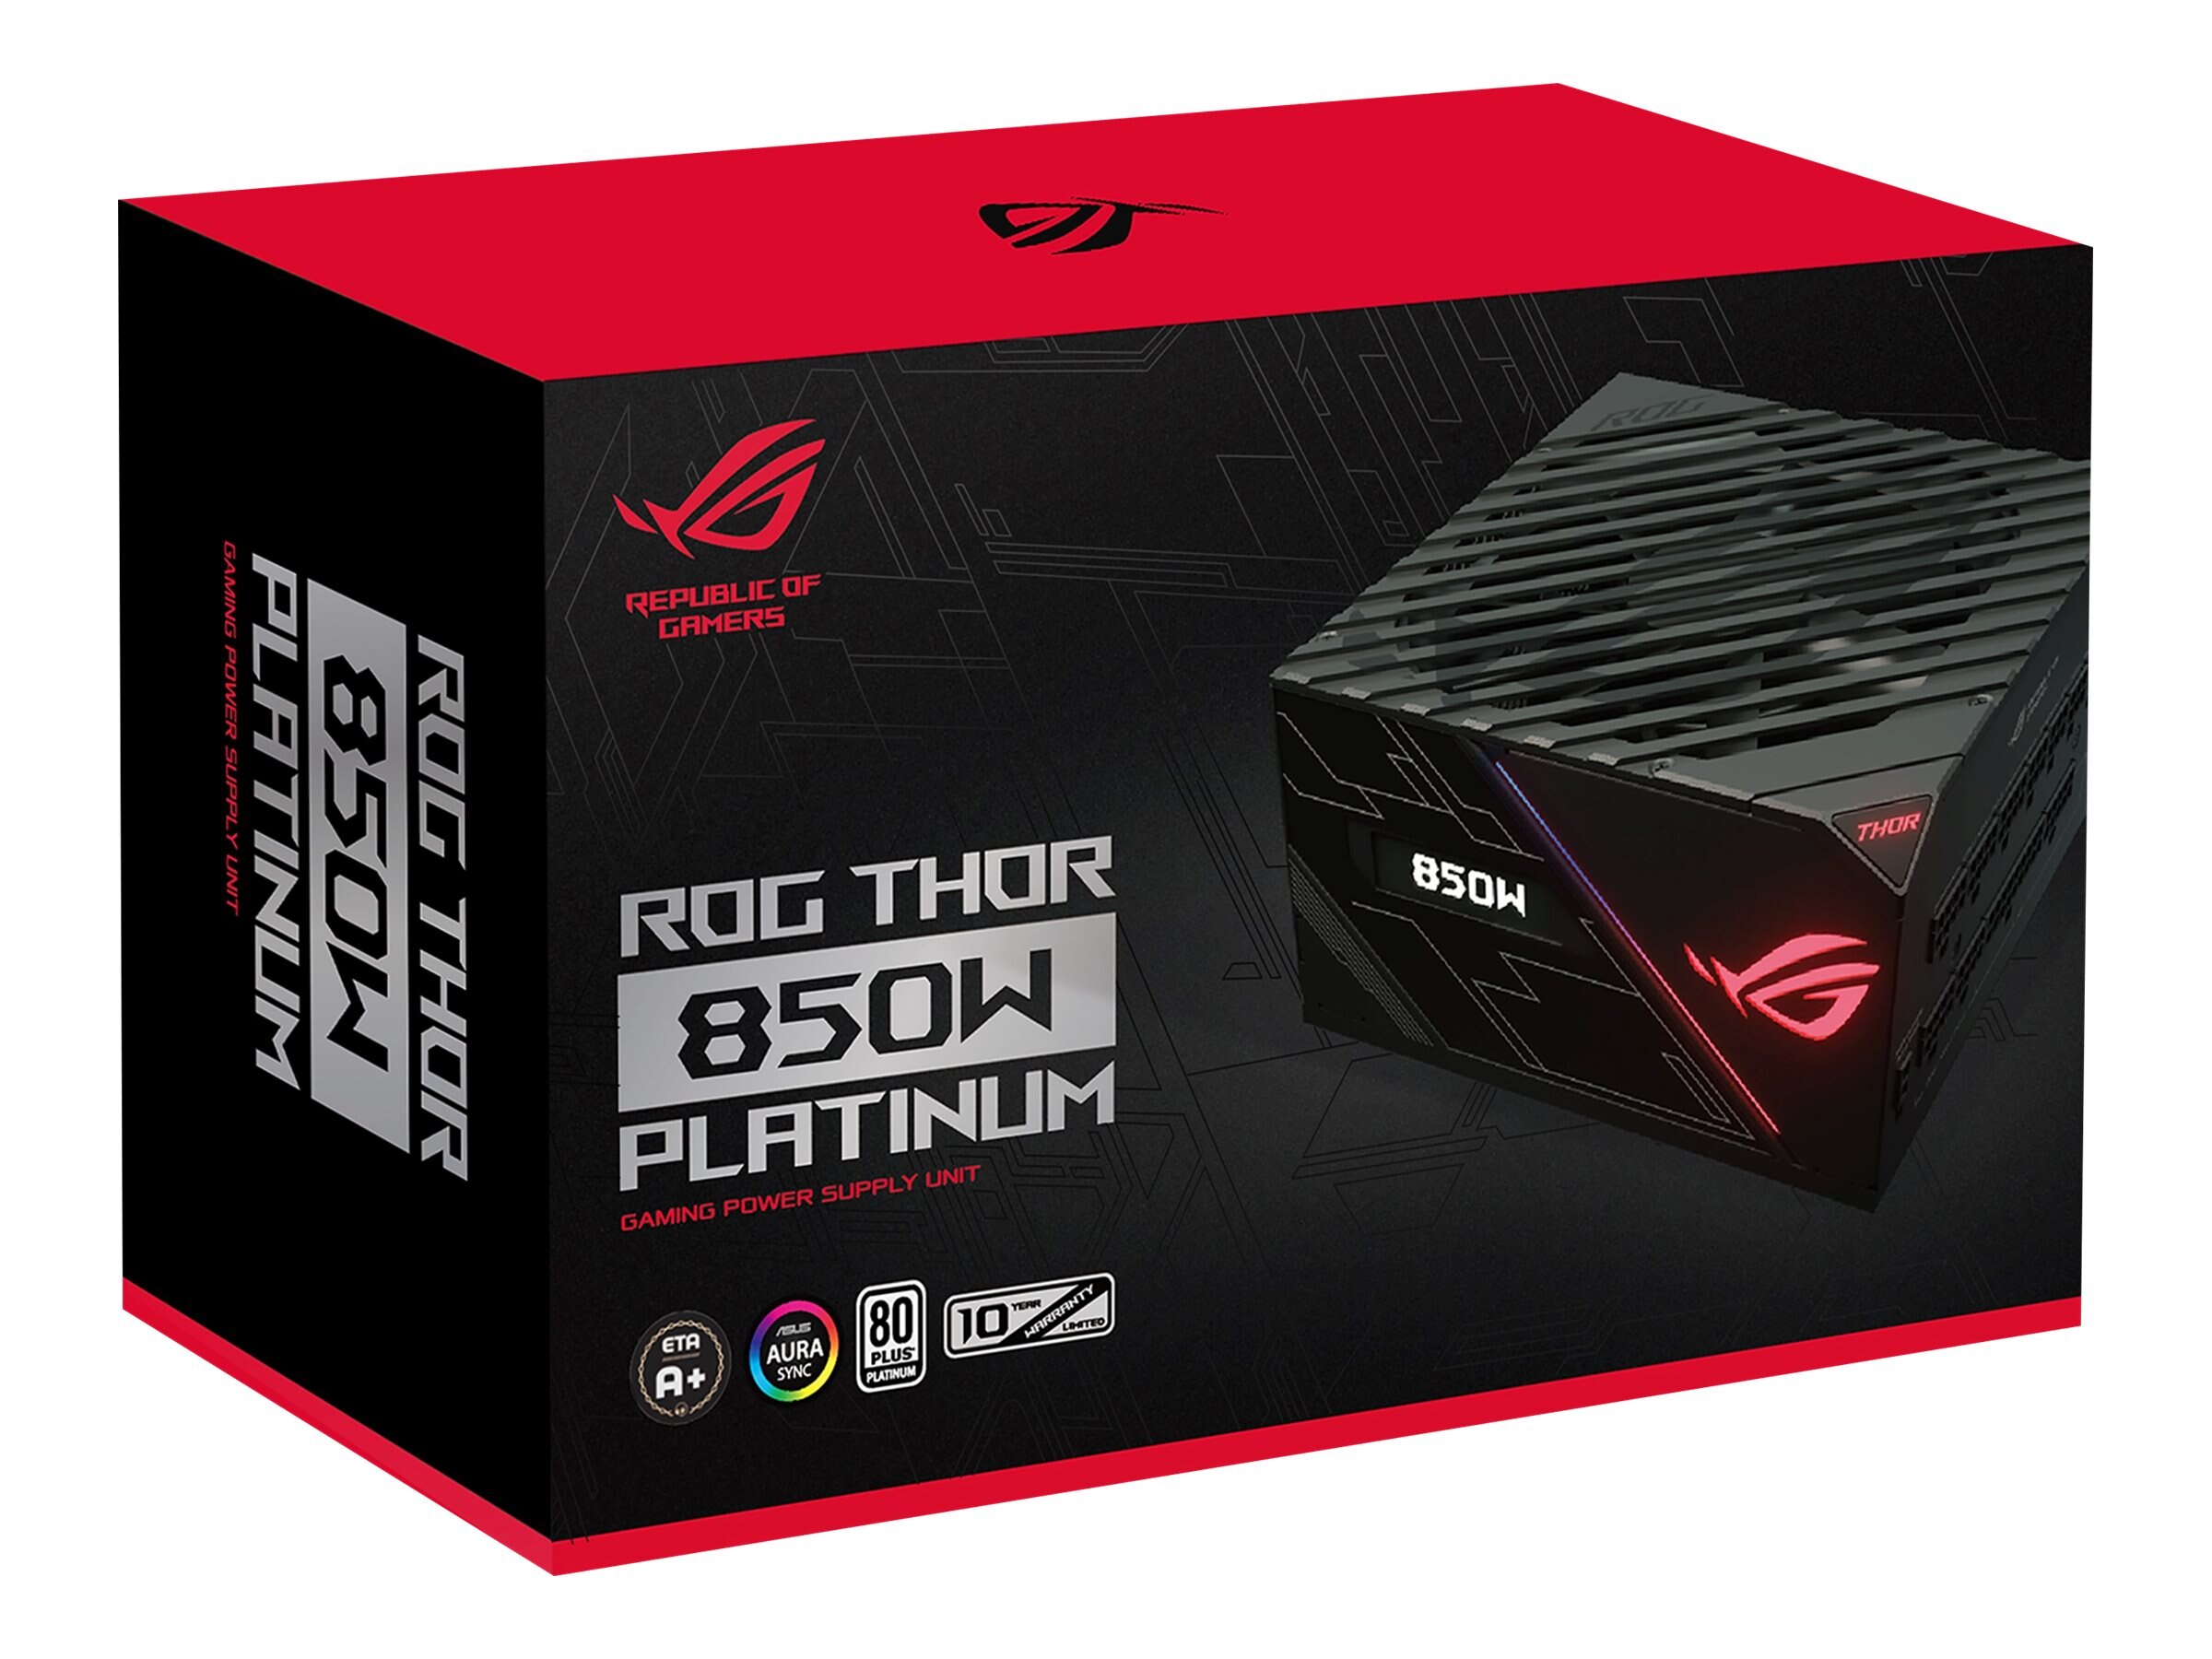 Asus Rog Thor 850 80+ Platinum 850W CTLRFULLY Modular RGB Power Supply